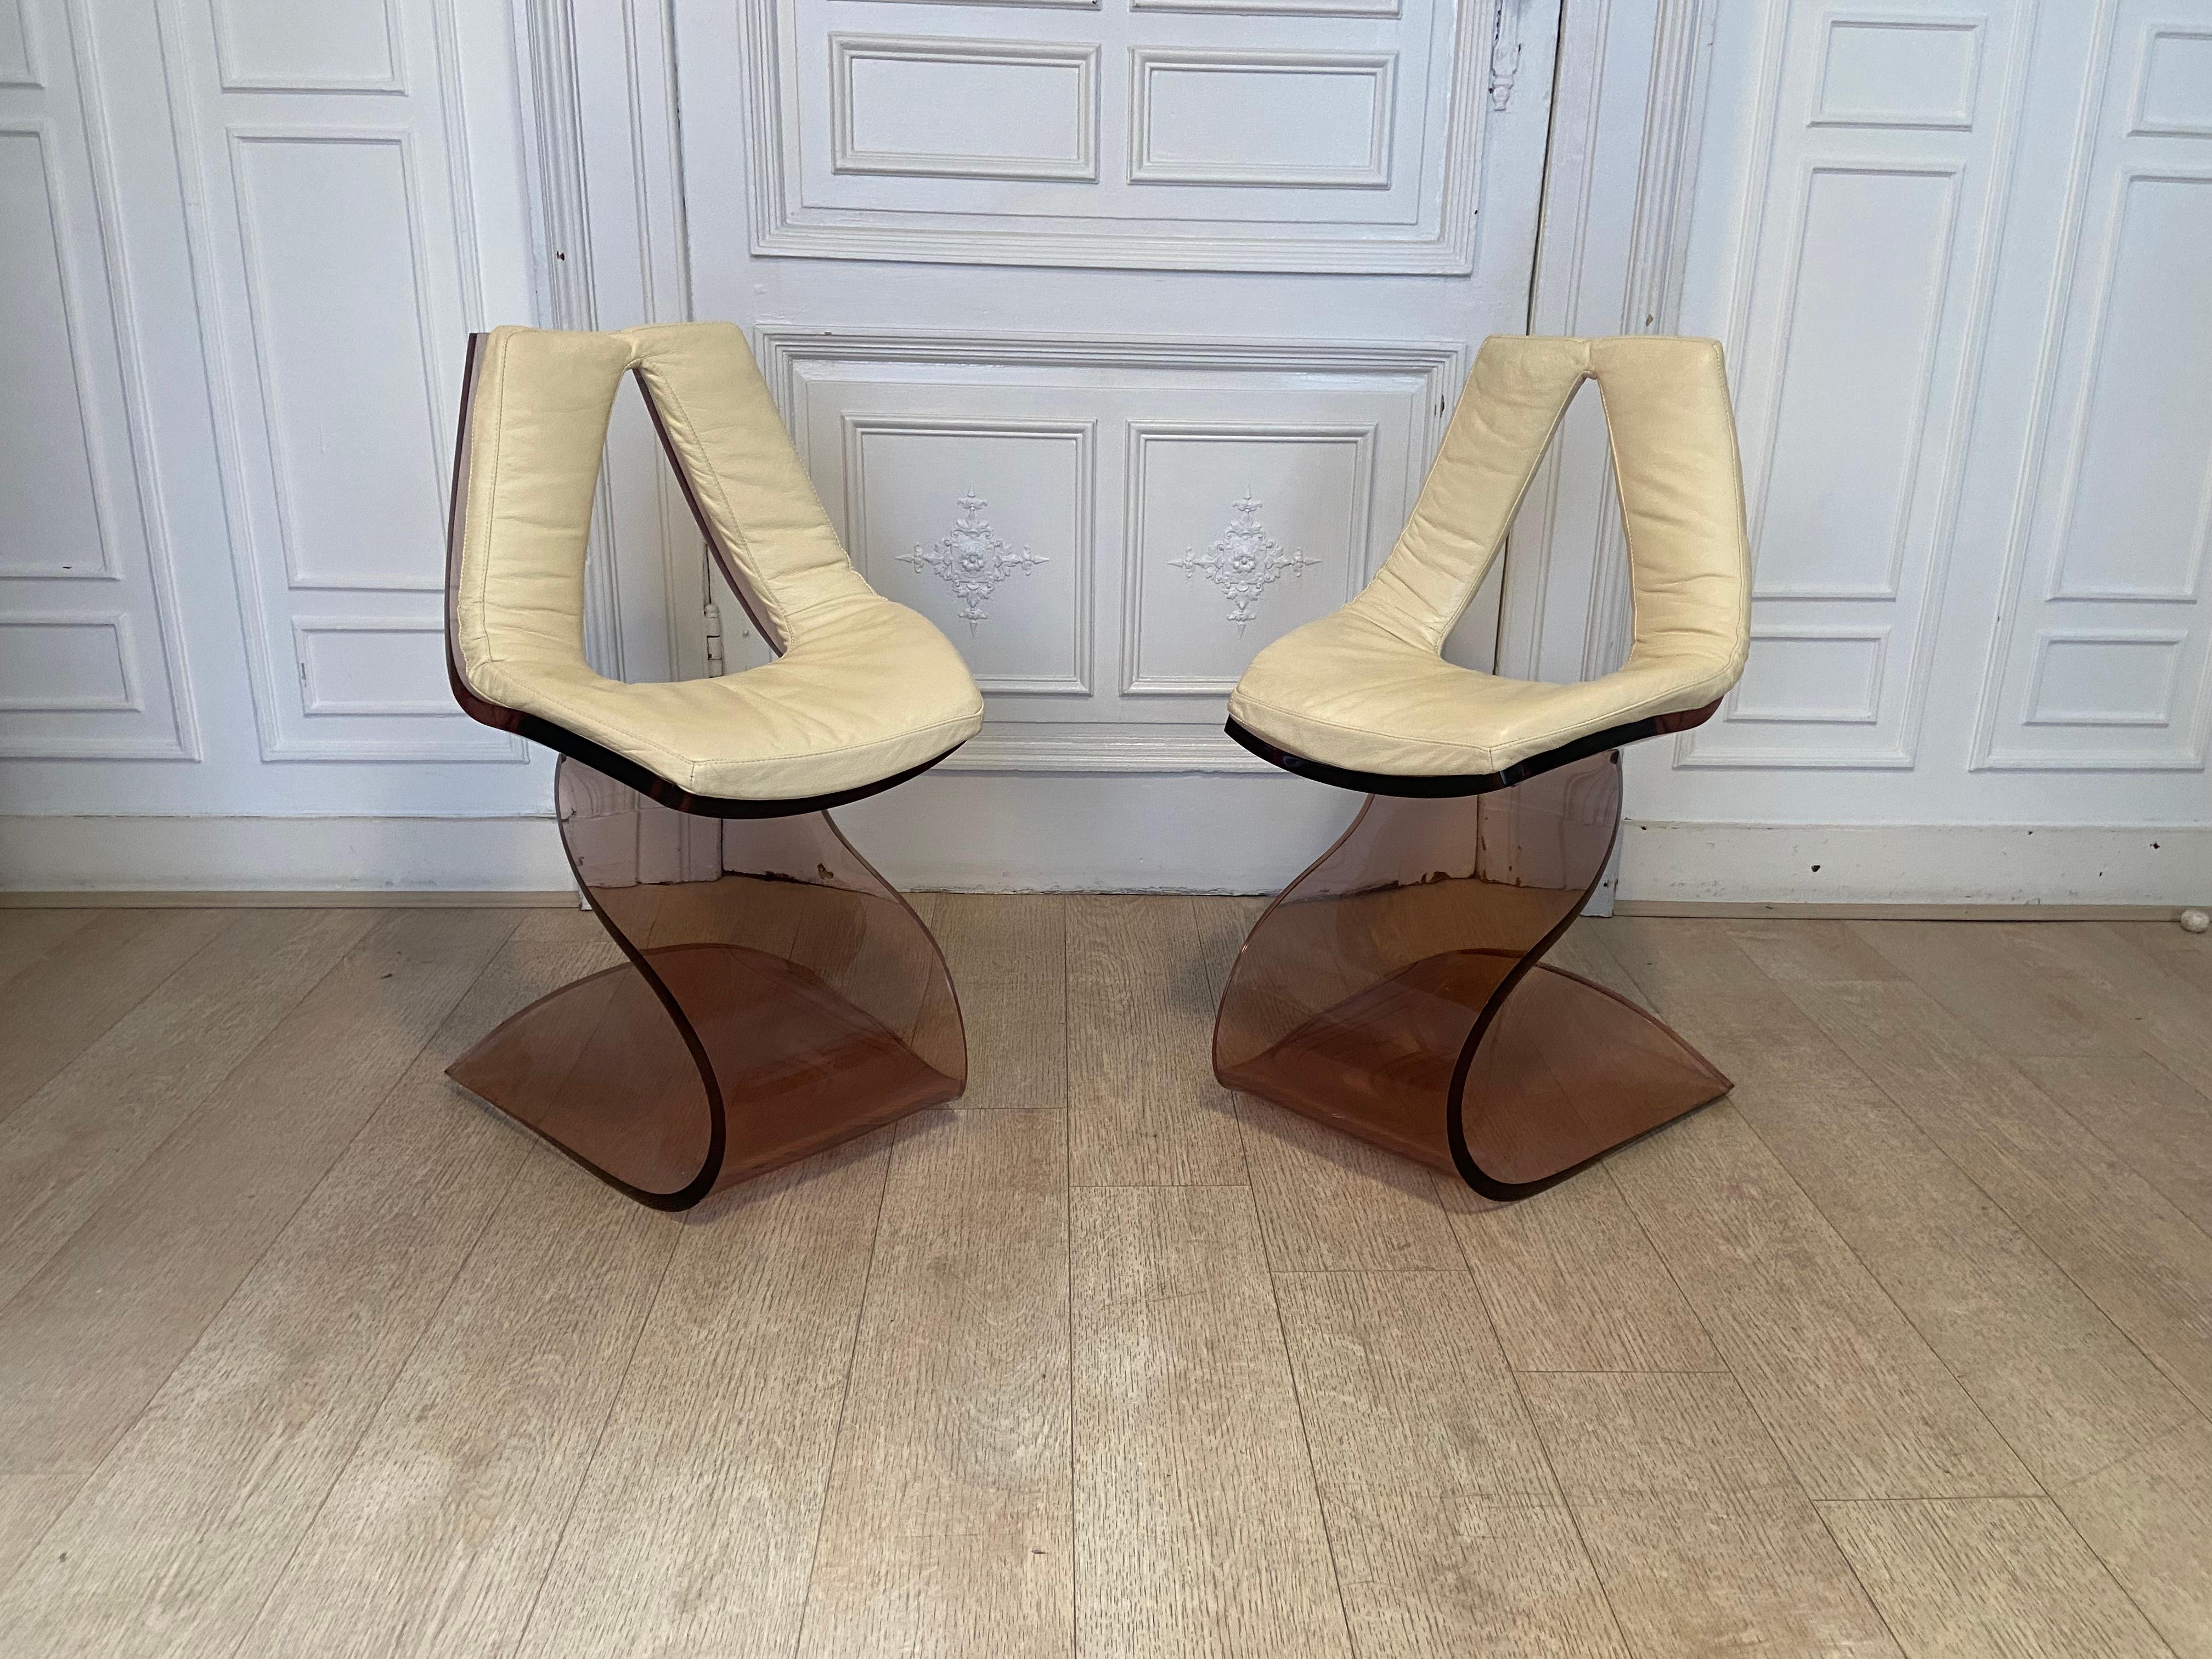 Michel Dumas Chairs, Plexiglass, 1970s For Sale 1